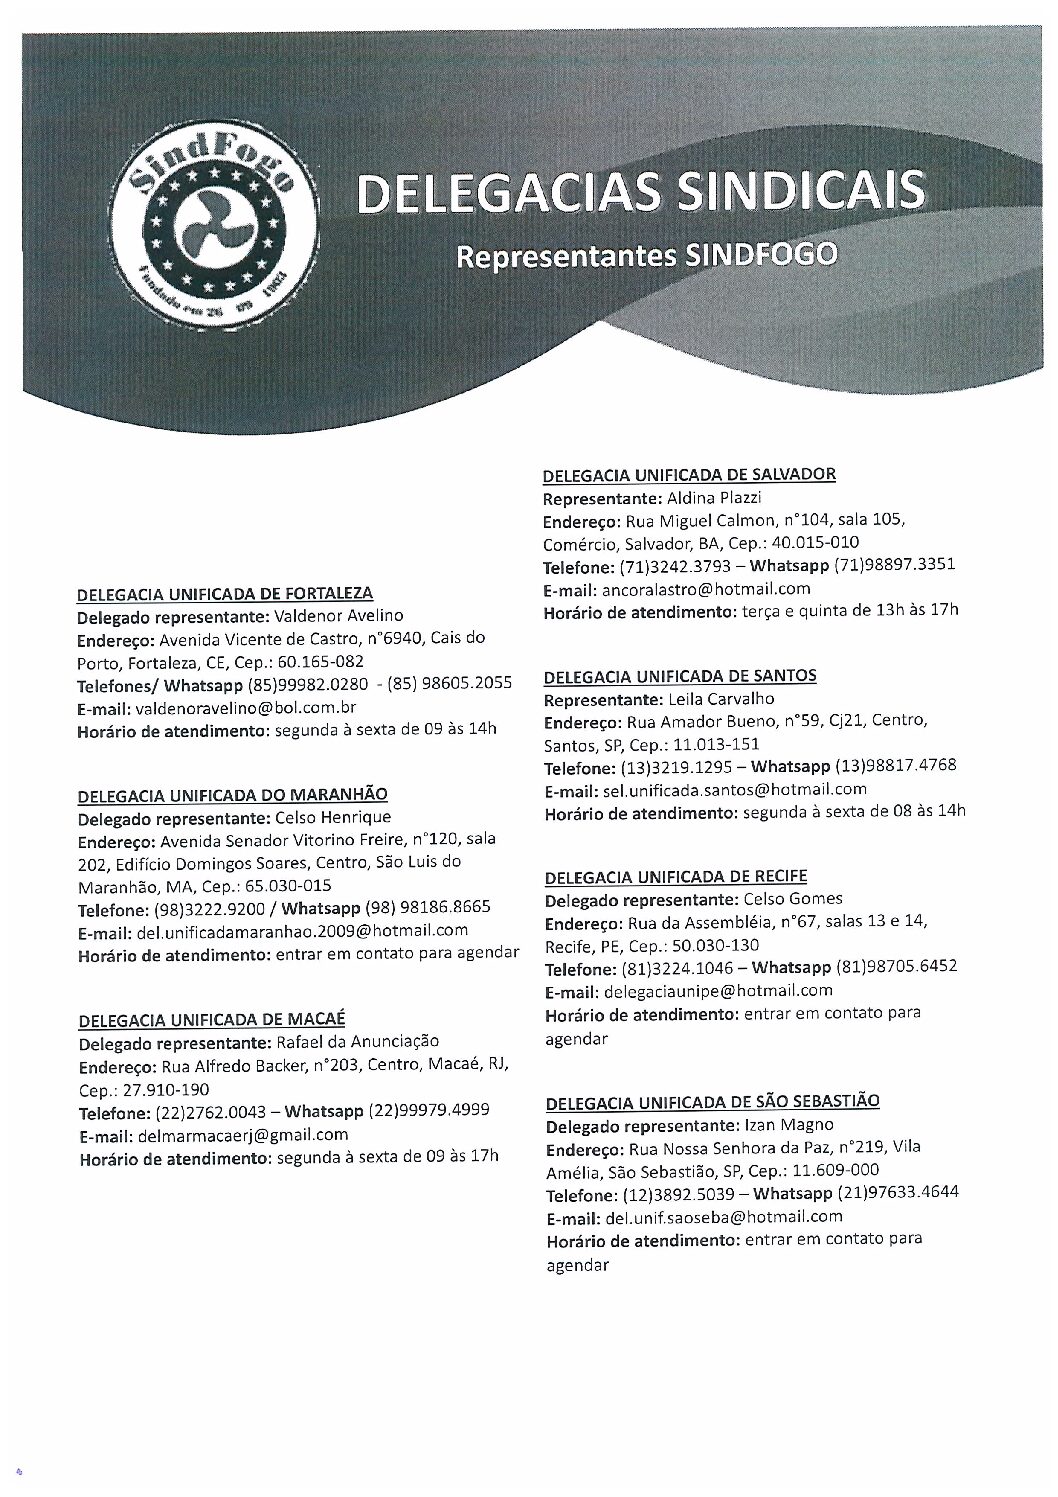 Delegacias-sindicais-pdf